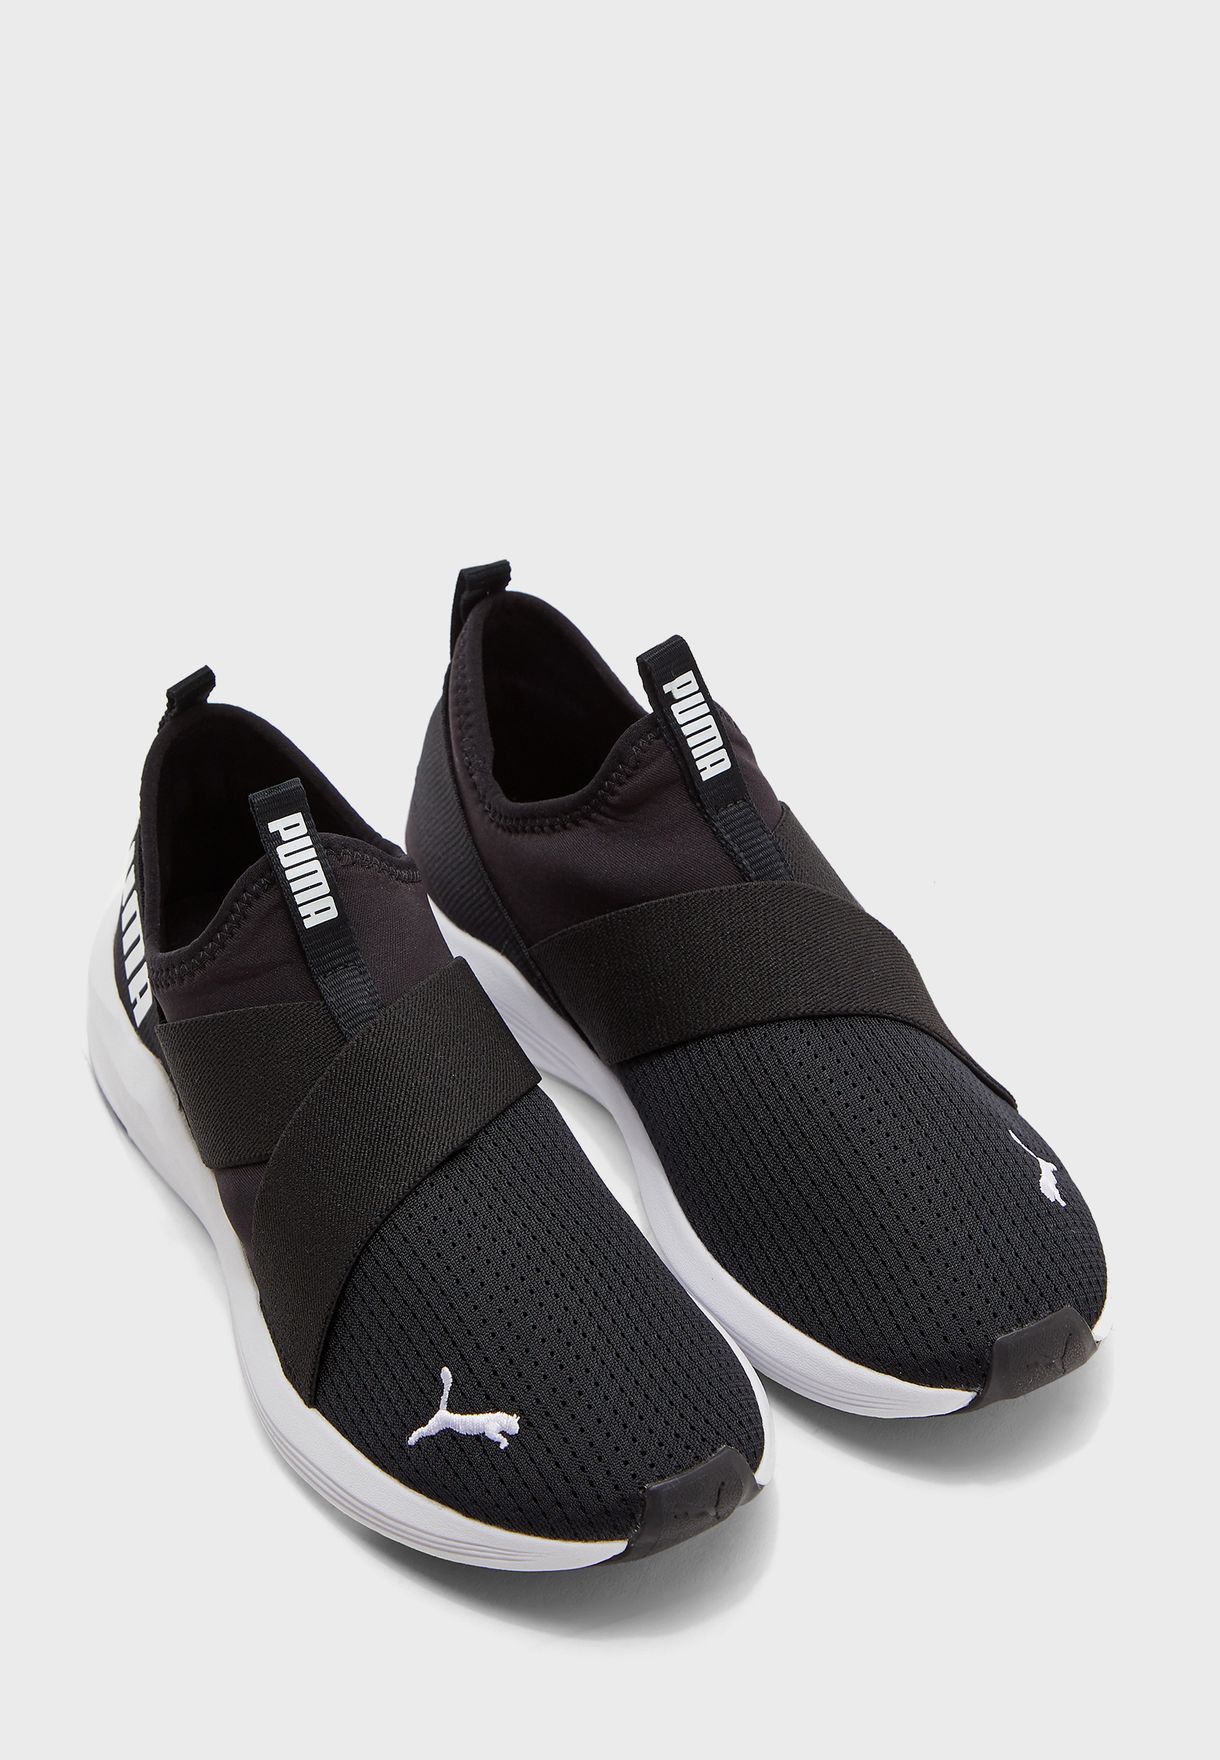 puma slip in sneakers